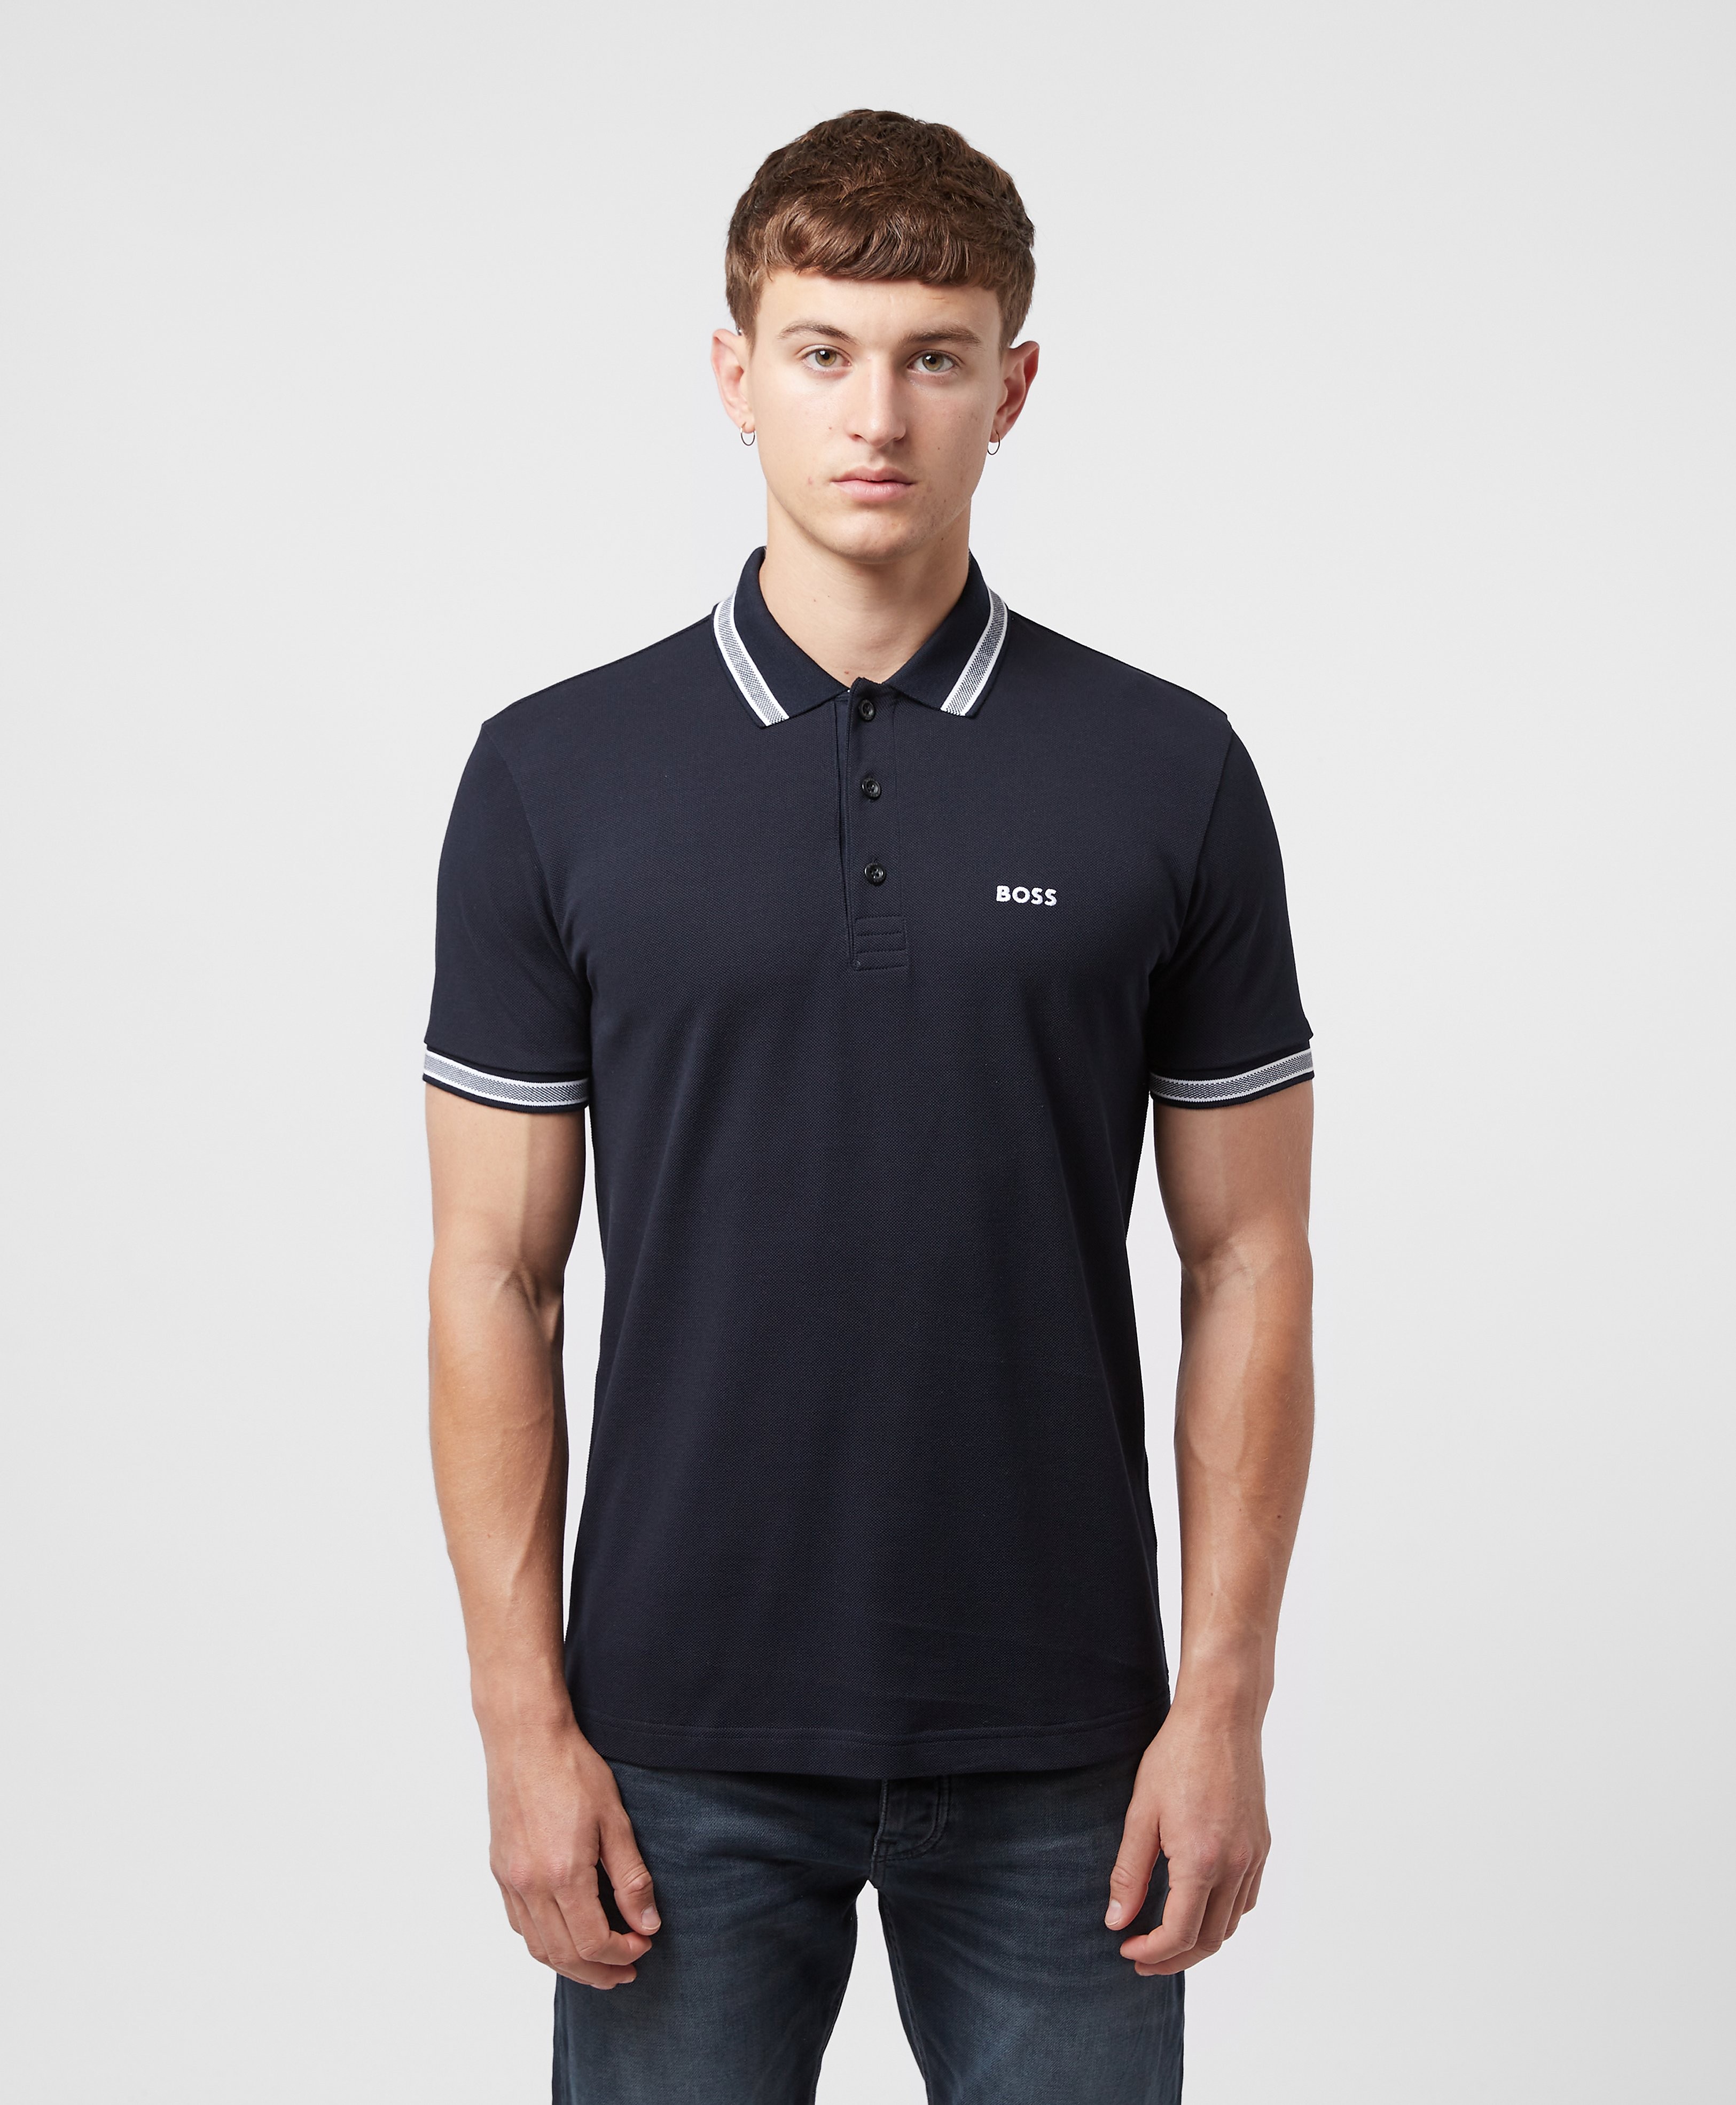 Men's BOSS Paddy Polo Shirt - Navy/White, Navy/White product